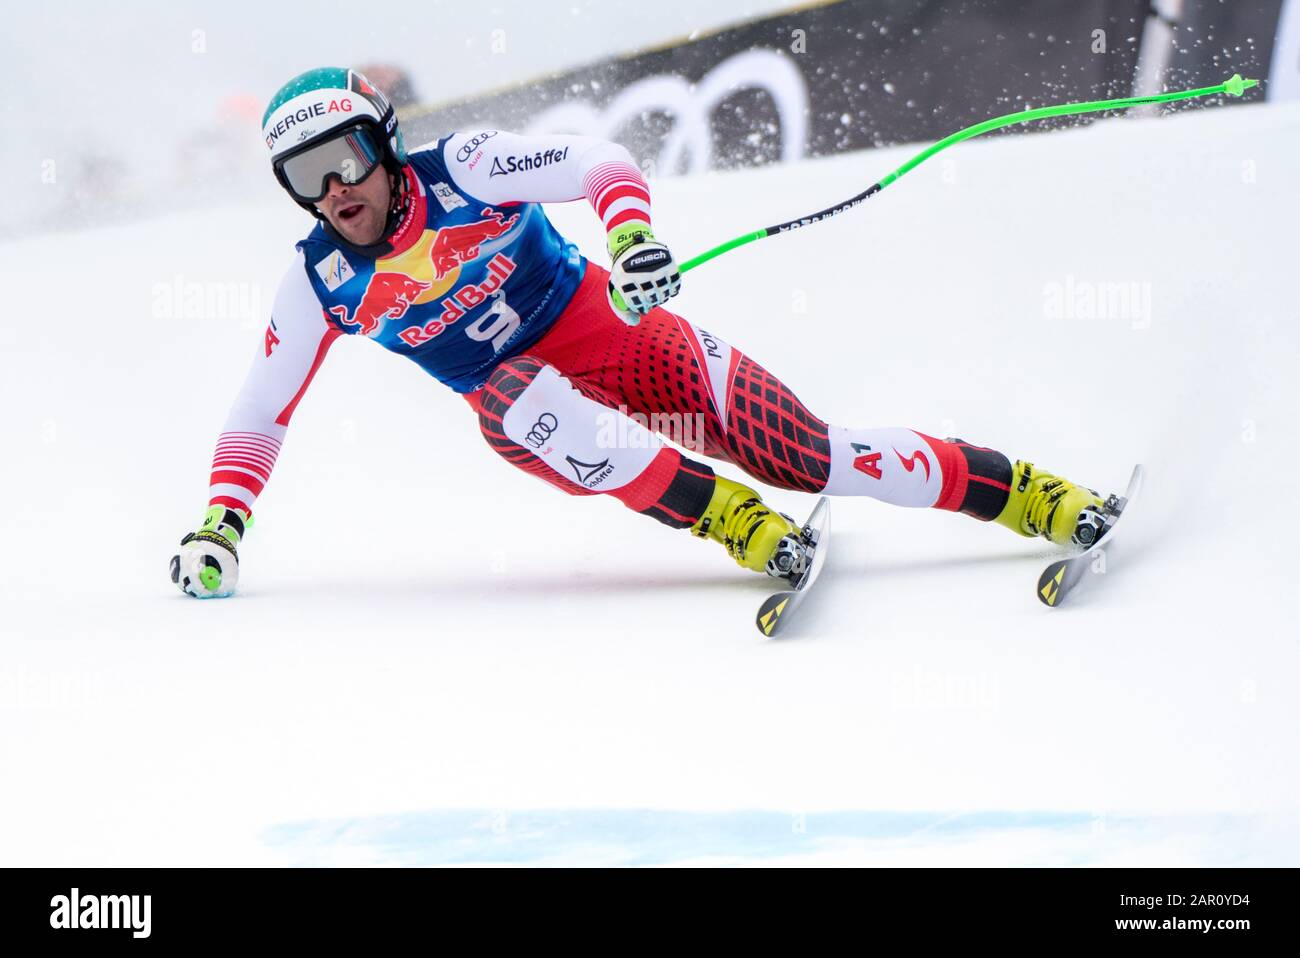 Vincent Kriechmayr of Austria at the Ski Alpin: 80. Hahnenkamm Race 2020 - Audi FIS Alpine Ski World Cup - Men's Downhill at the Streif on January 25, 2020 in Kitzbuehel, AUSTRIA. Credit: European Sports Photographic Agency/Alamy Live News Stock Photo